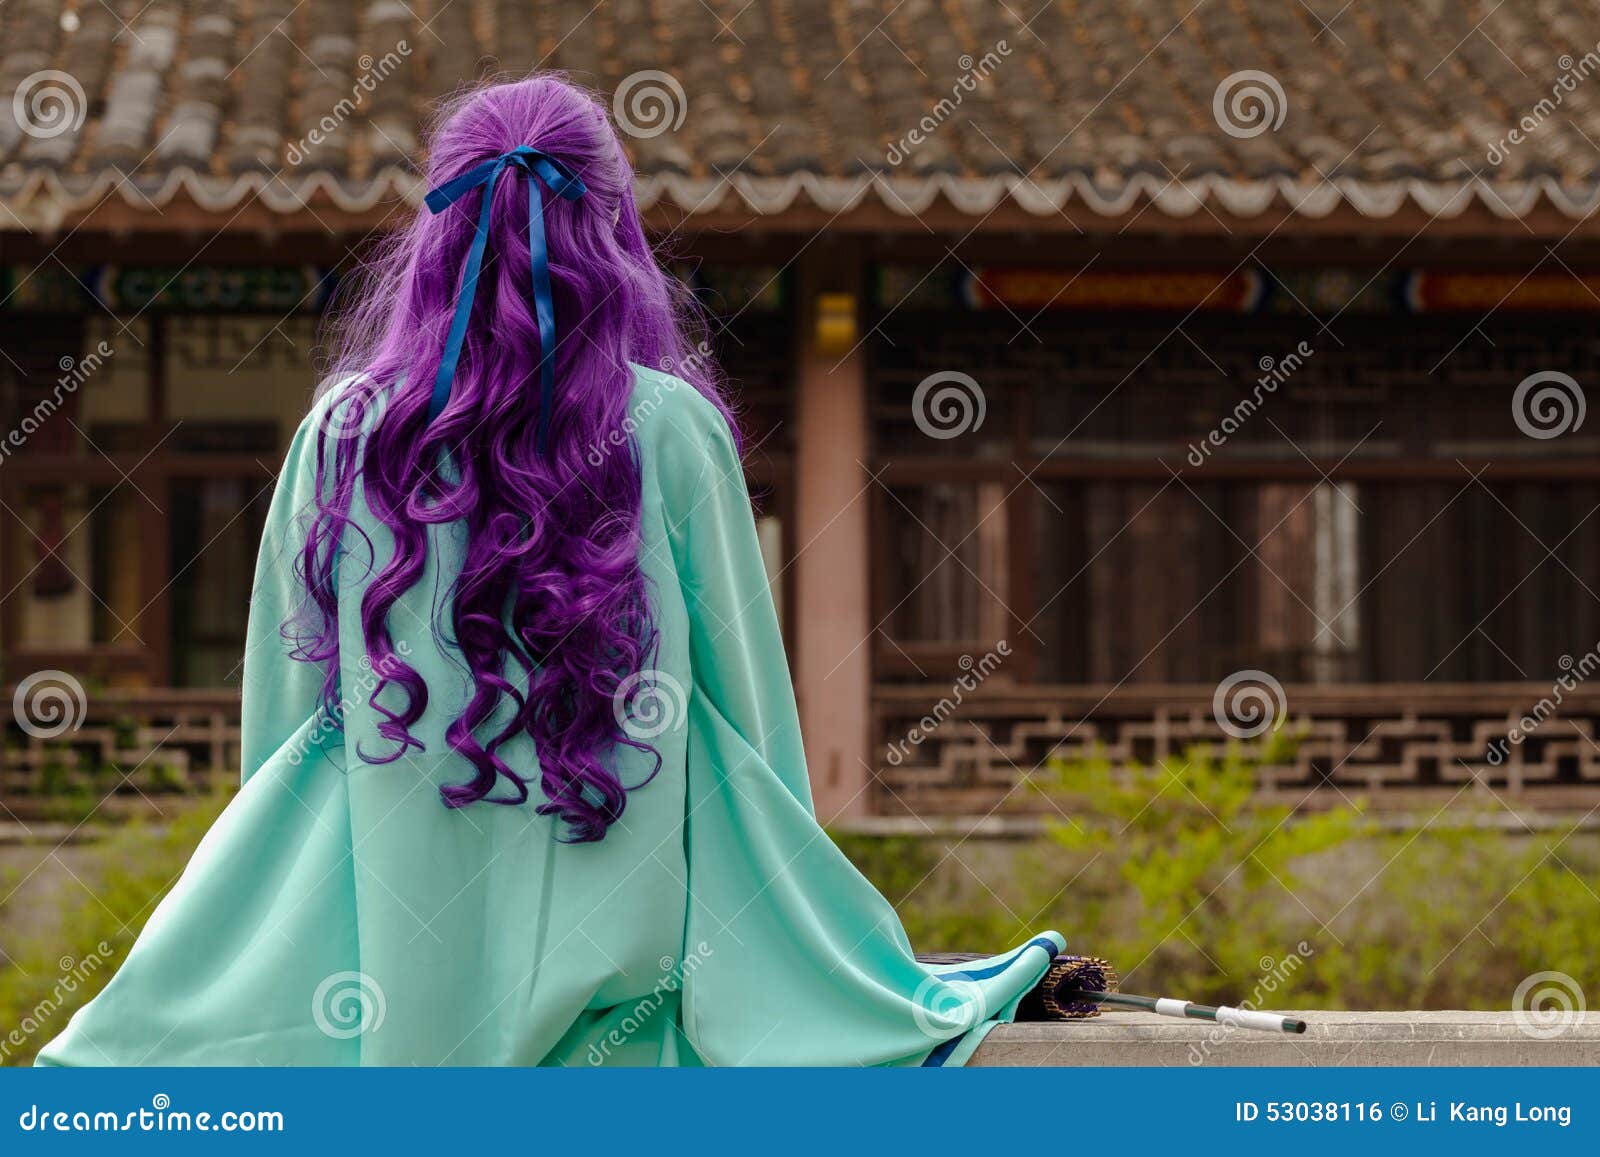 Purple hair girl stock photo. Image of girl, enjoy, purple - 53038116